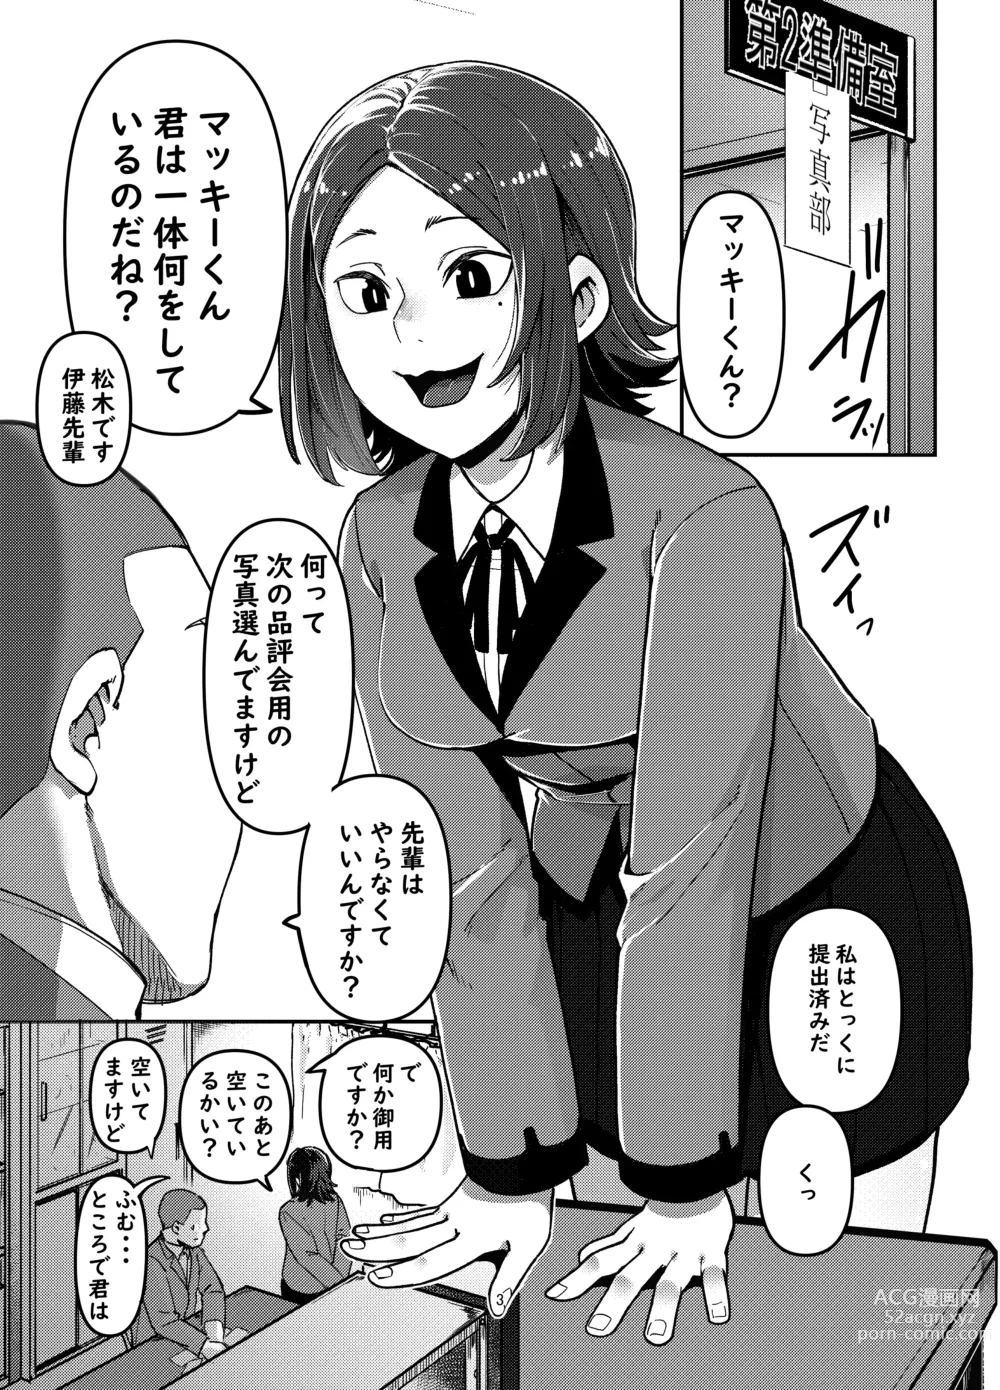 Page 3 of doujinshi Kamera o Tsukatte Odoseba Iijan ♪